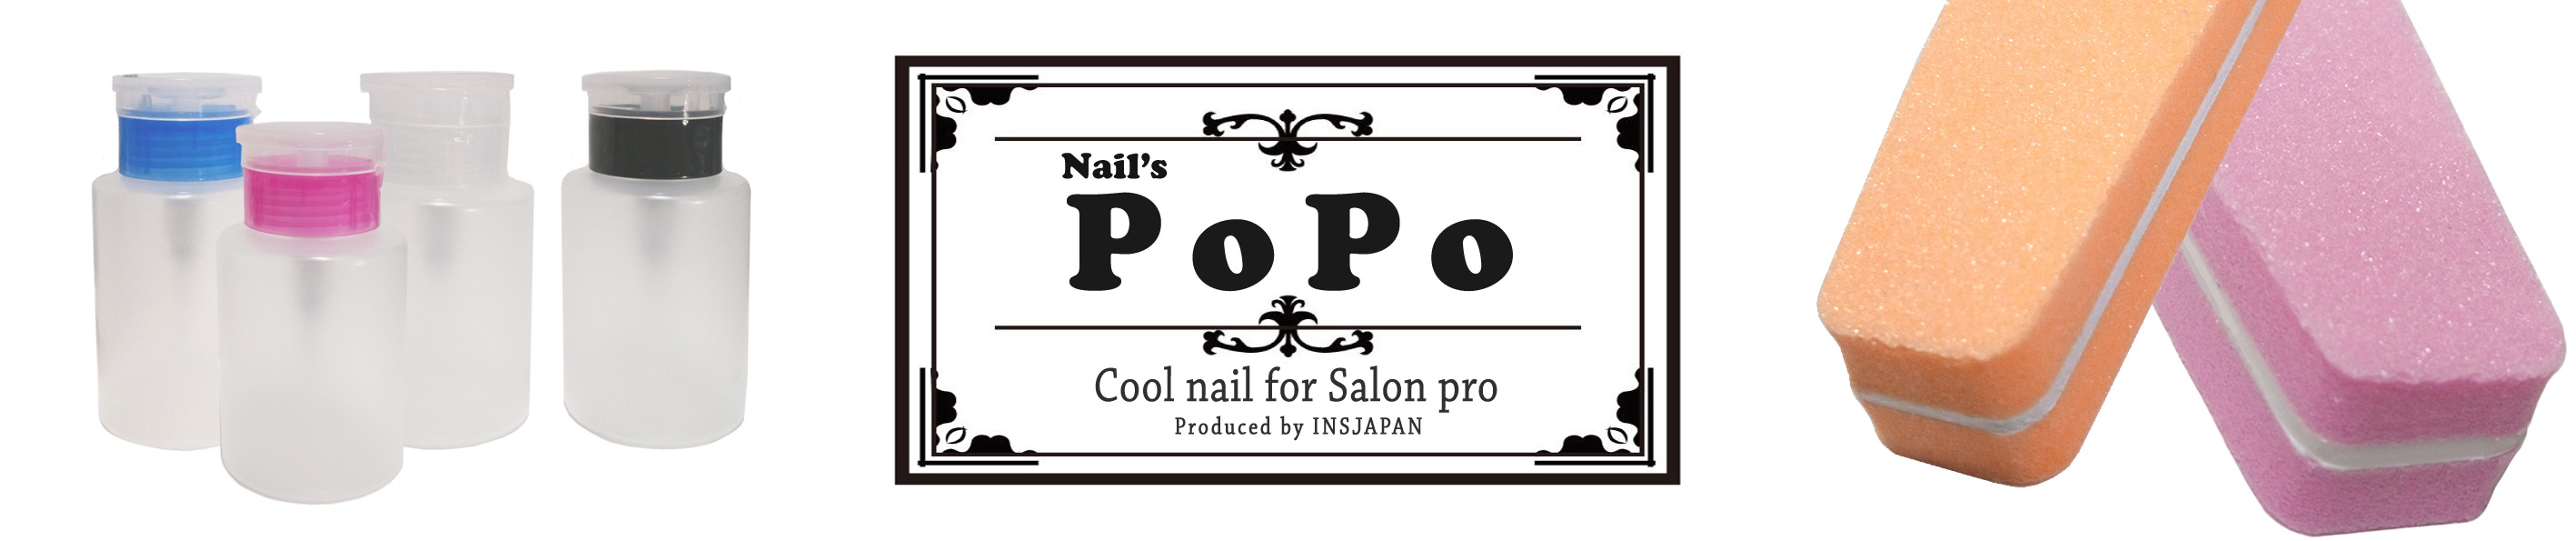 Nail's PoPo